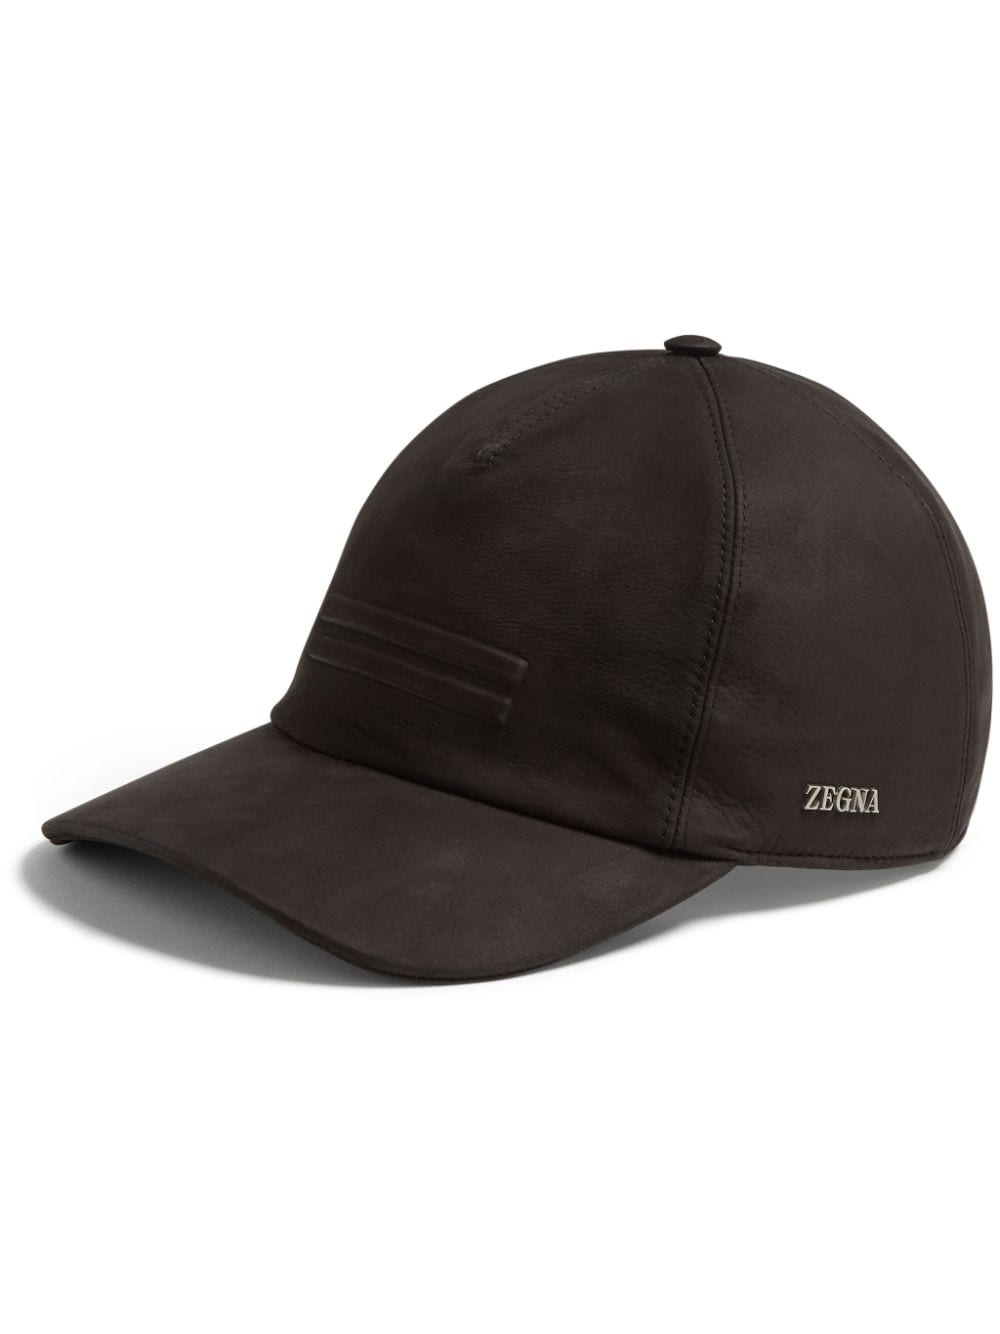 Zegna SECONDSKIN leather baseball cap - Brown von Zegna